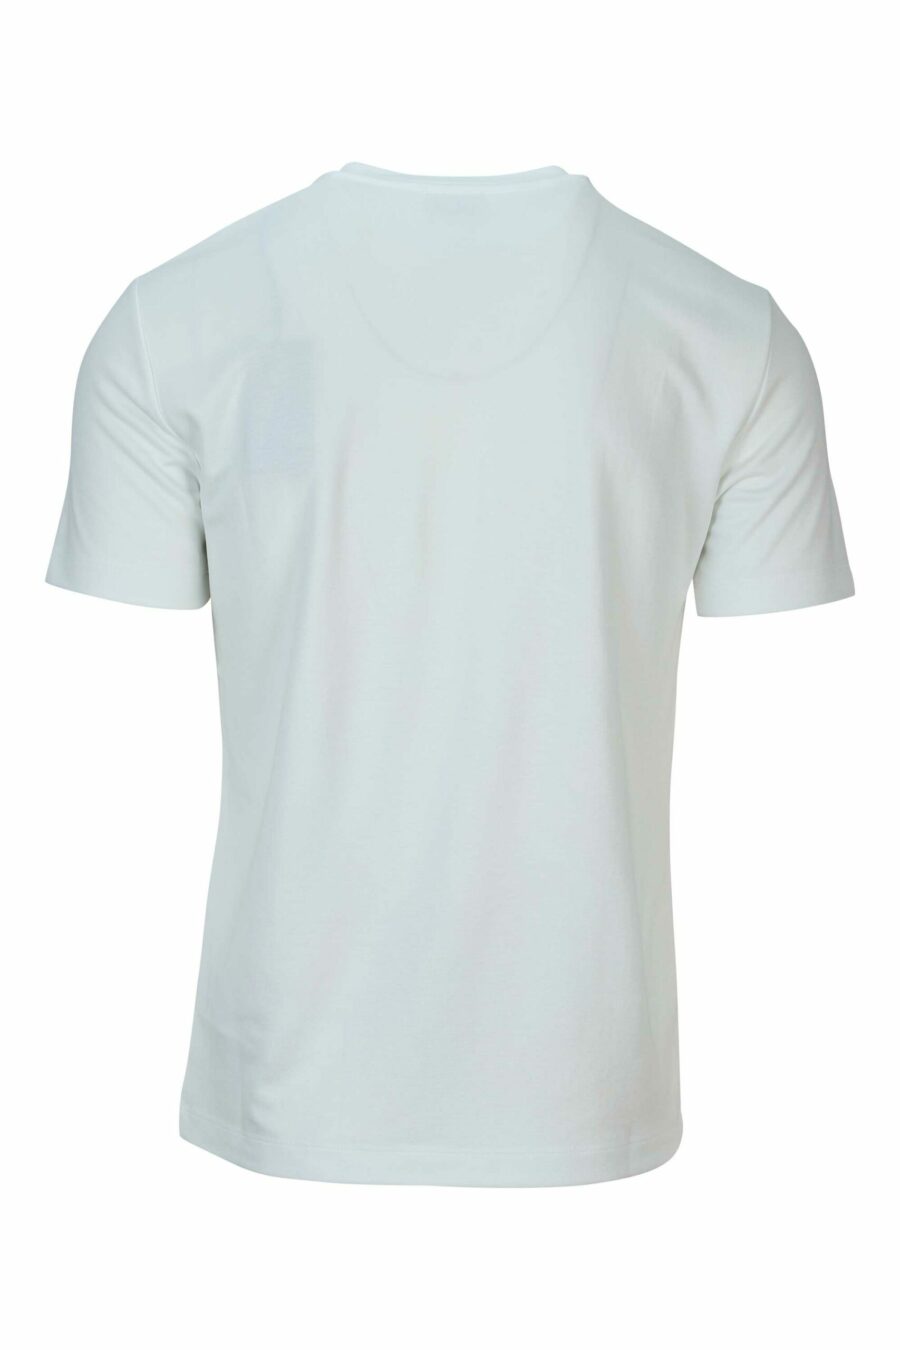 Camiseta blanca "oversize" con minilogo "lux identity" blanco en placa negra - 8058947508495 1 scaled